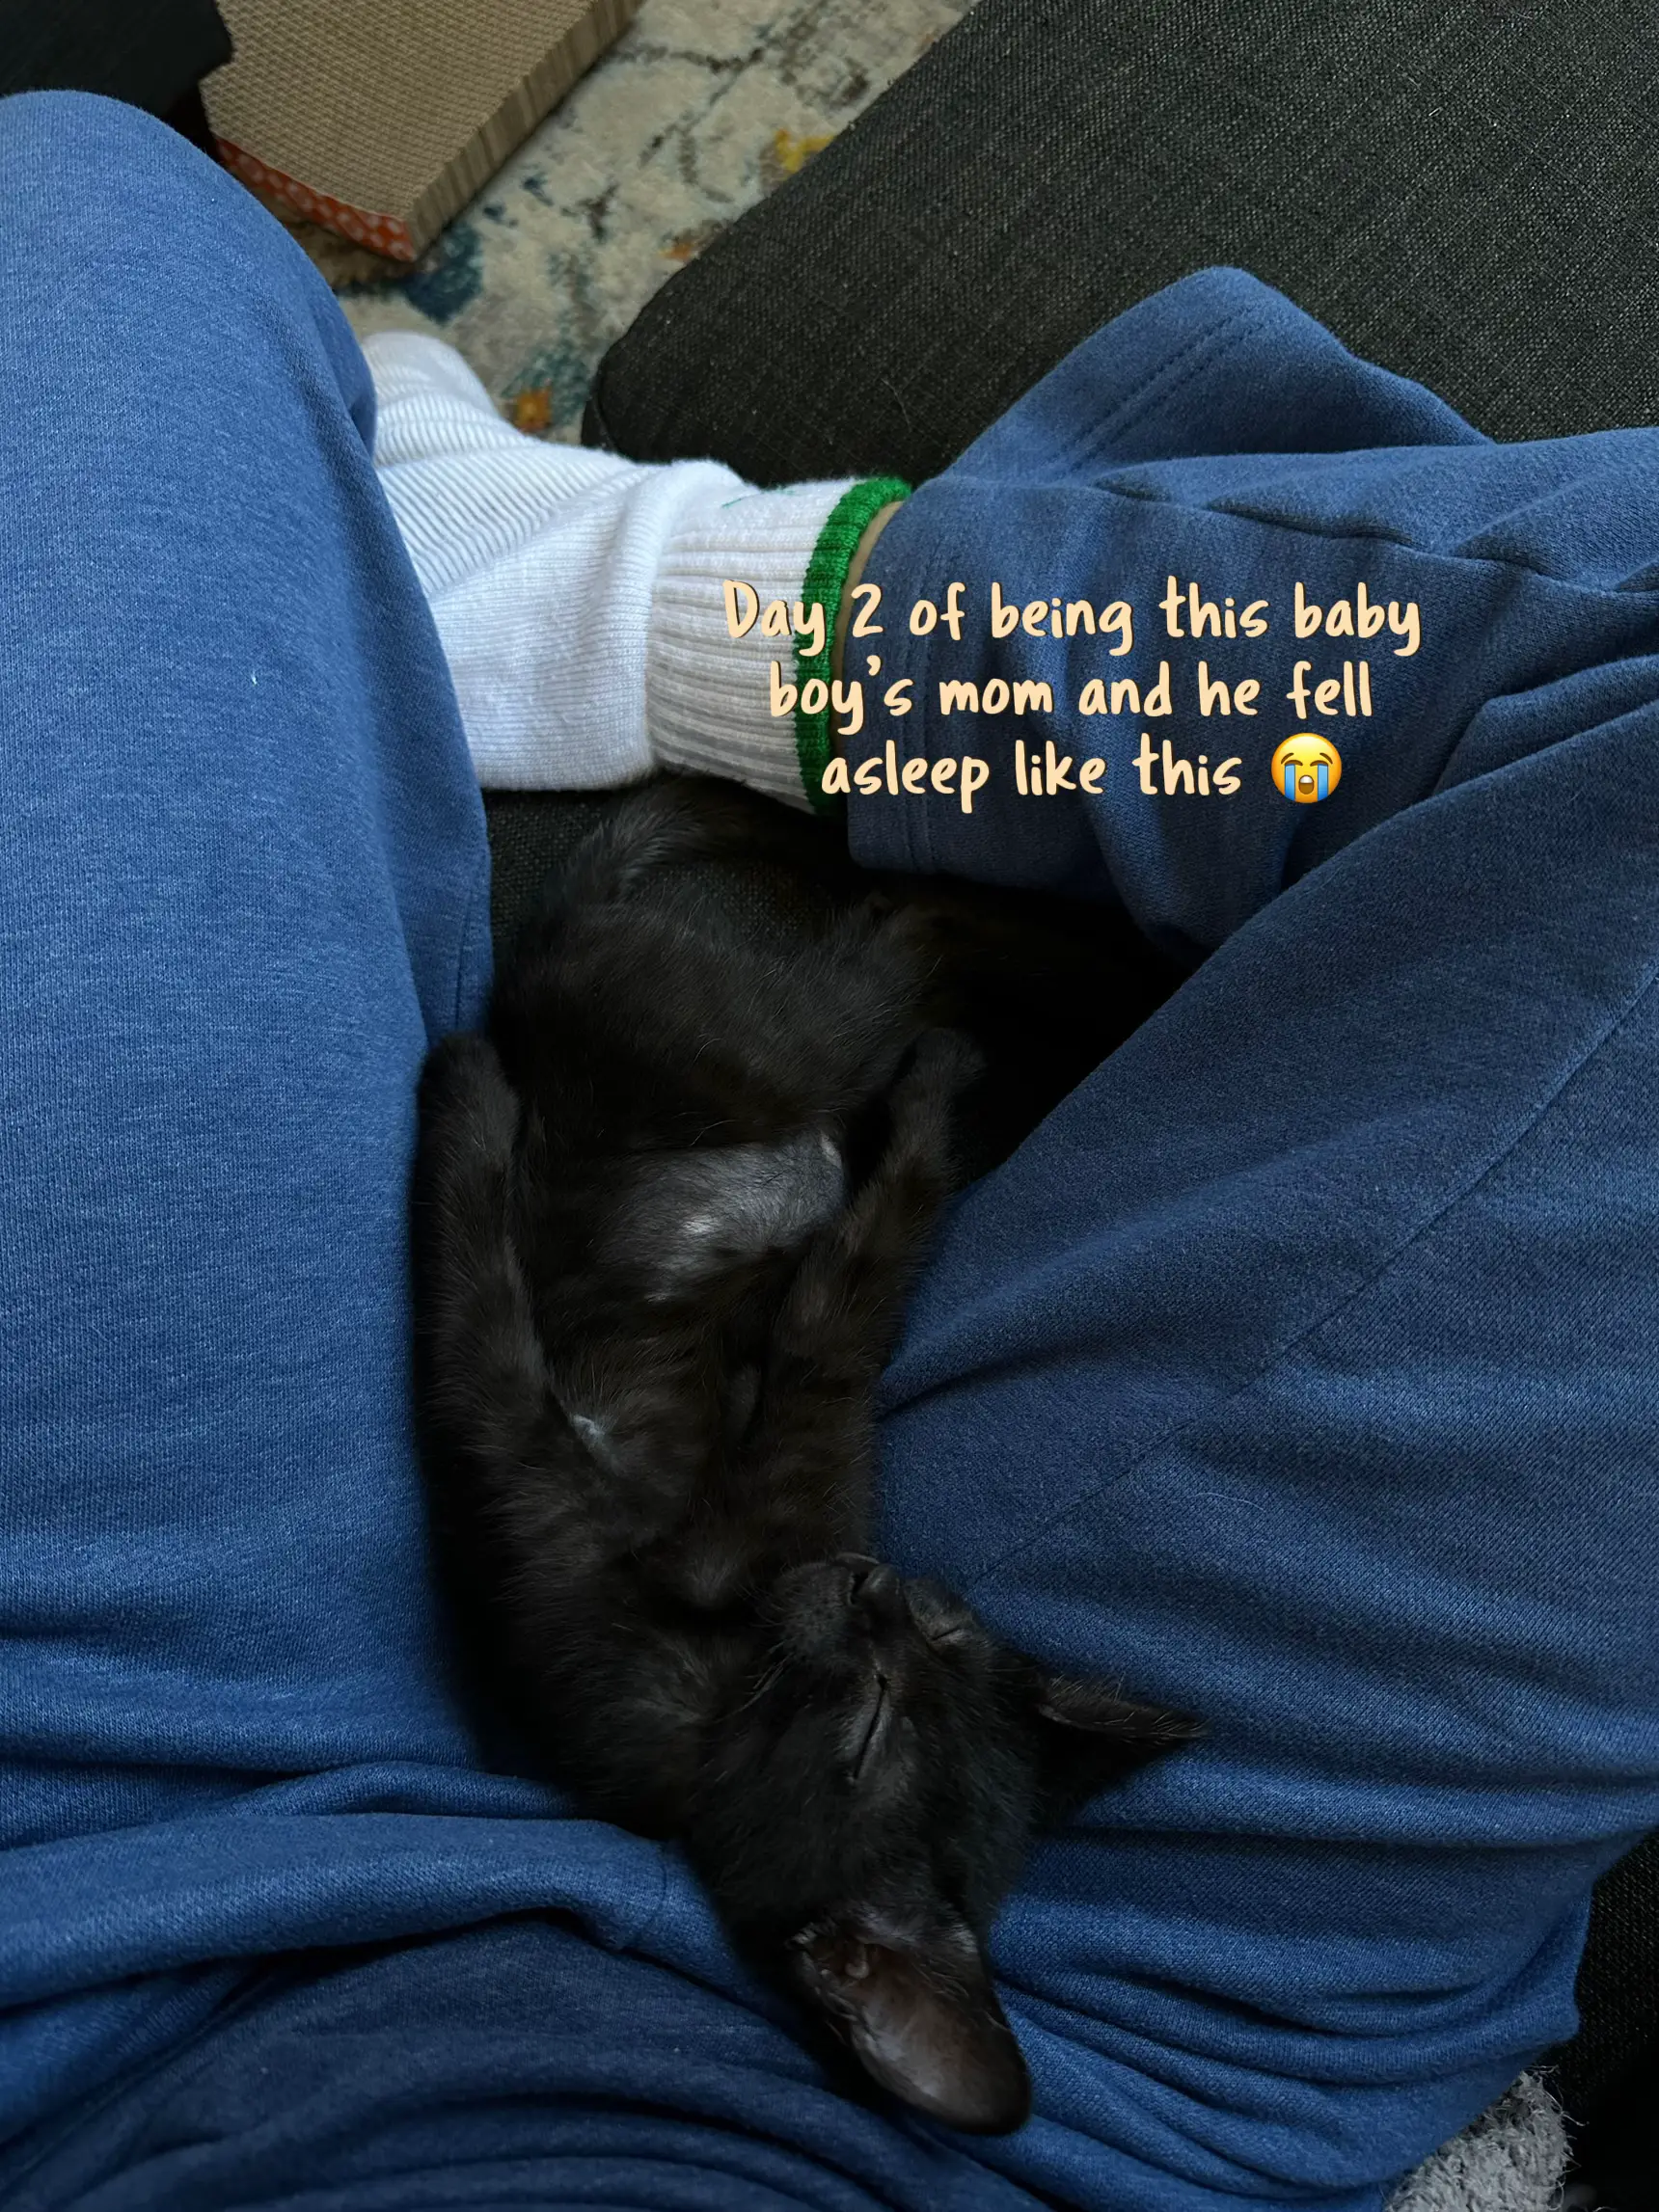 Meet Maisy, my eight-week-old blue-eyed black kitten : r/blackcats